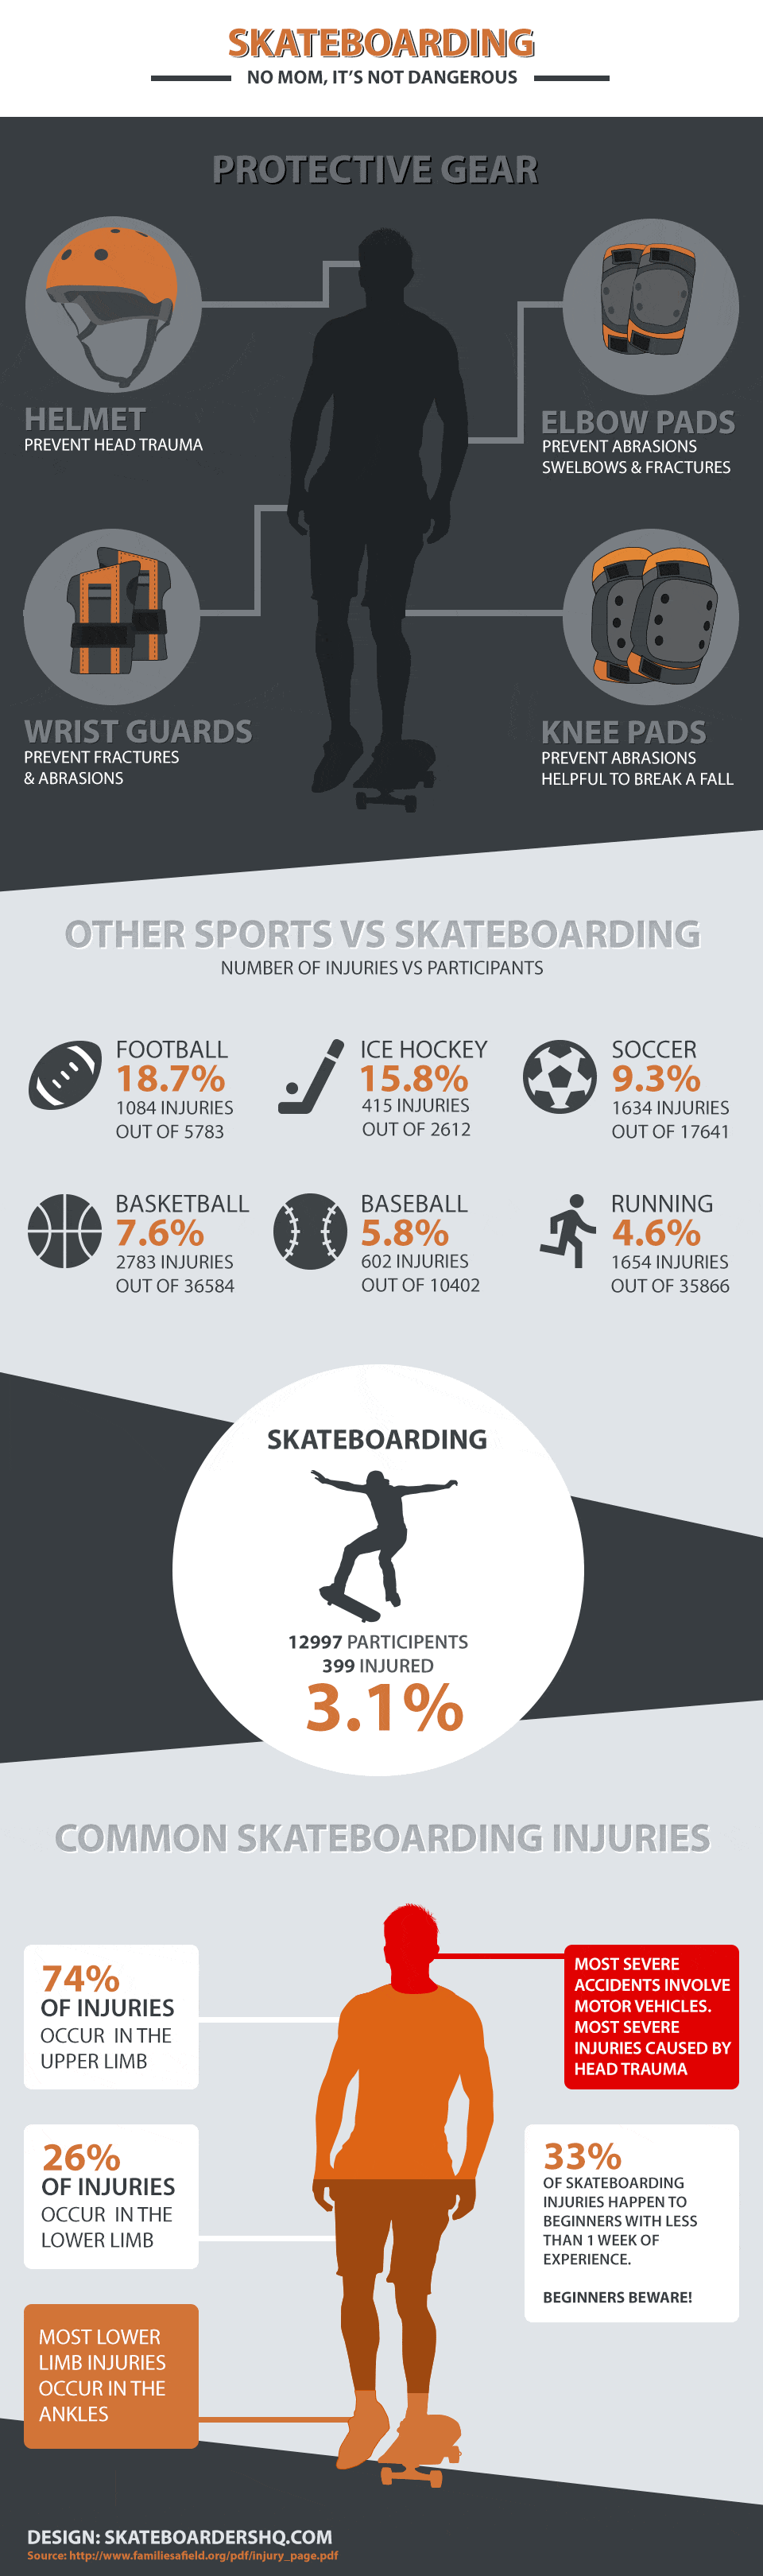 skate injury infographic 2